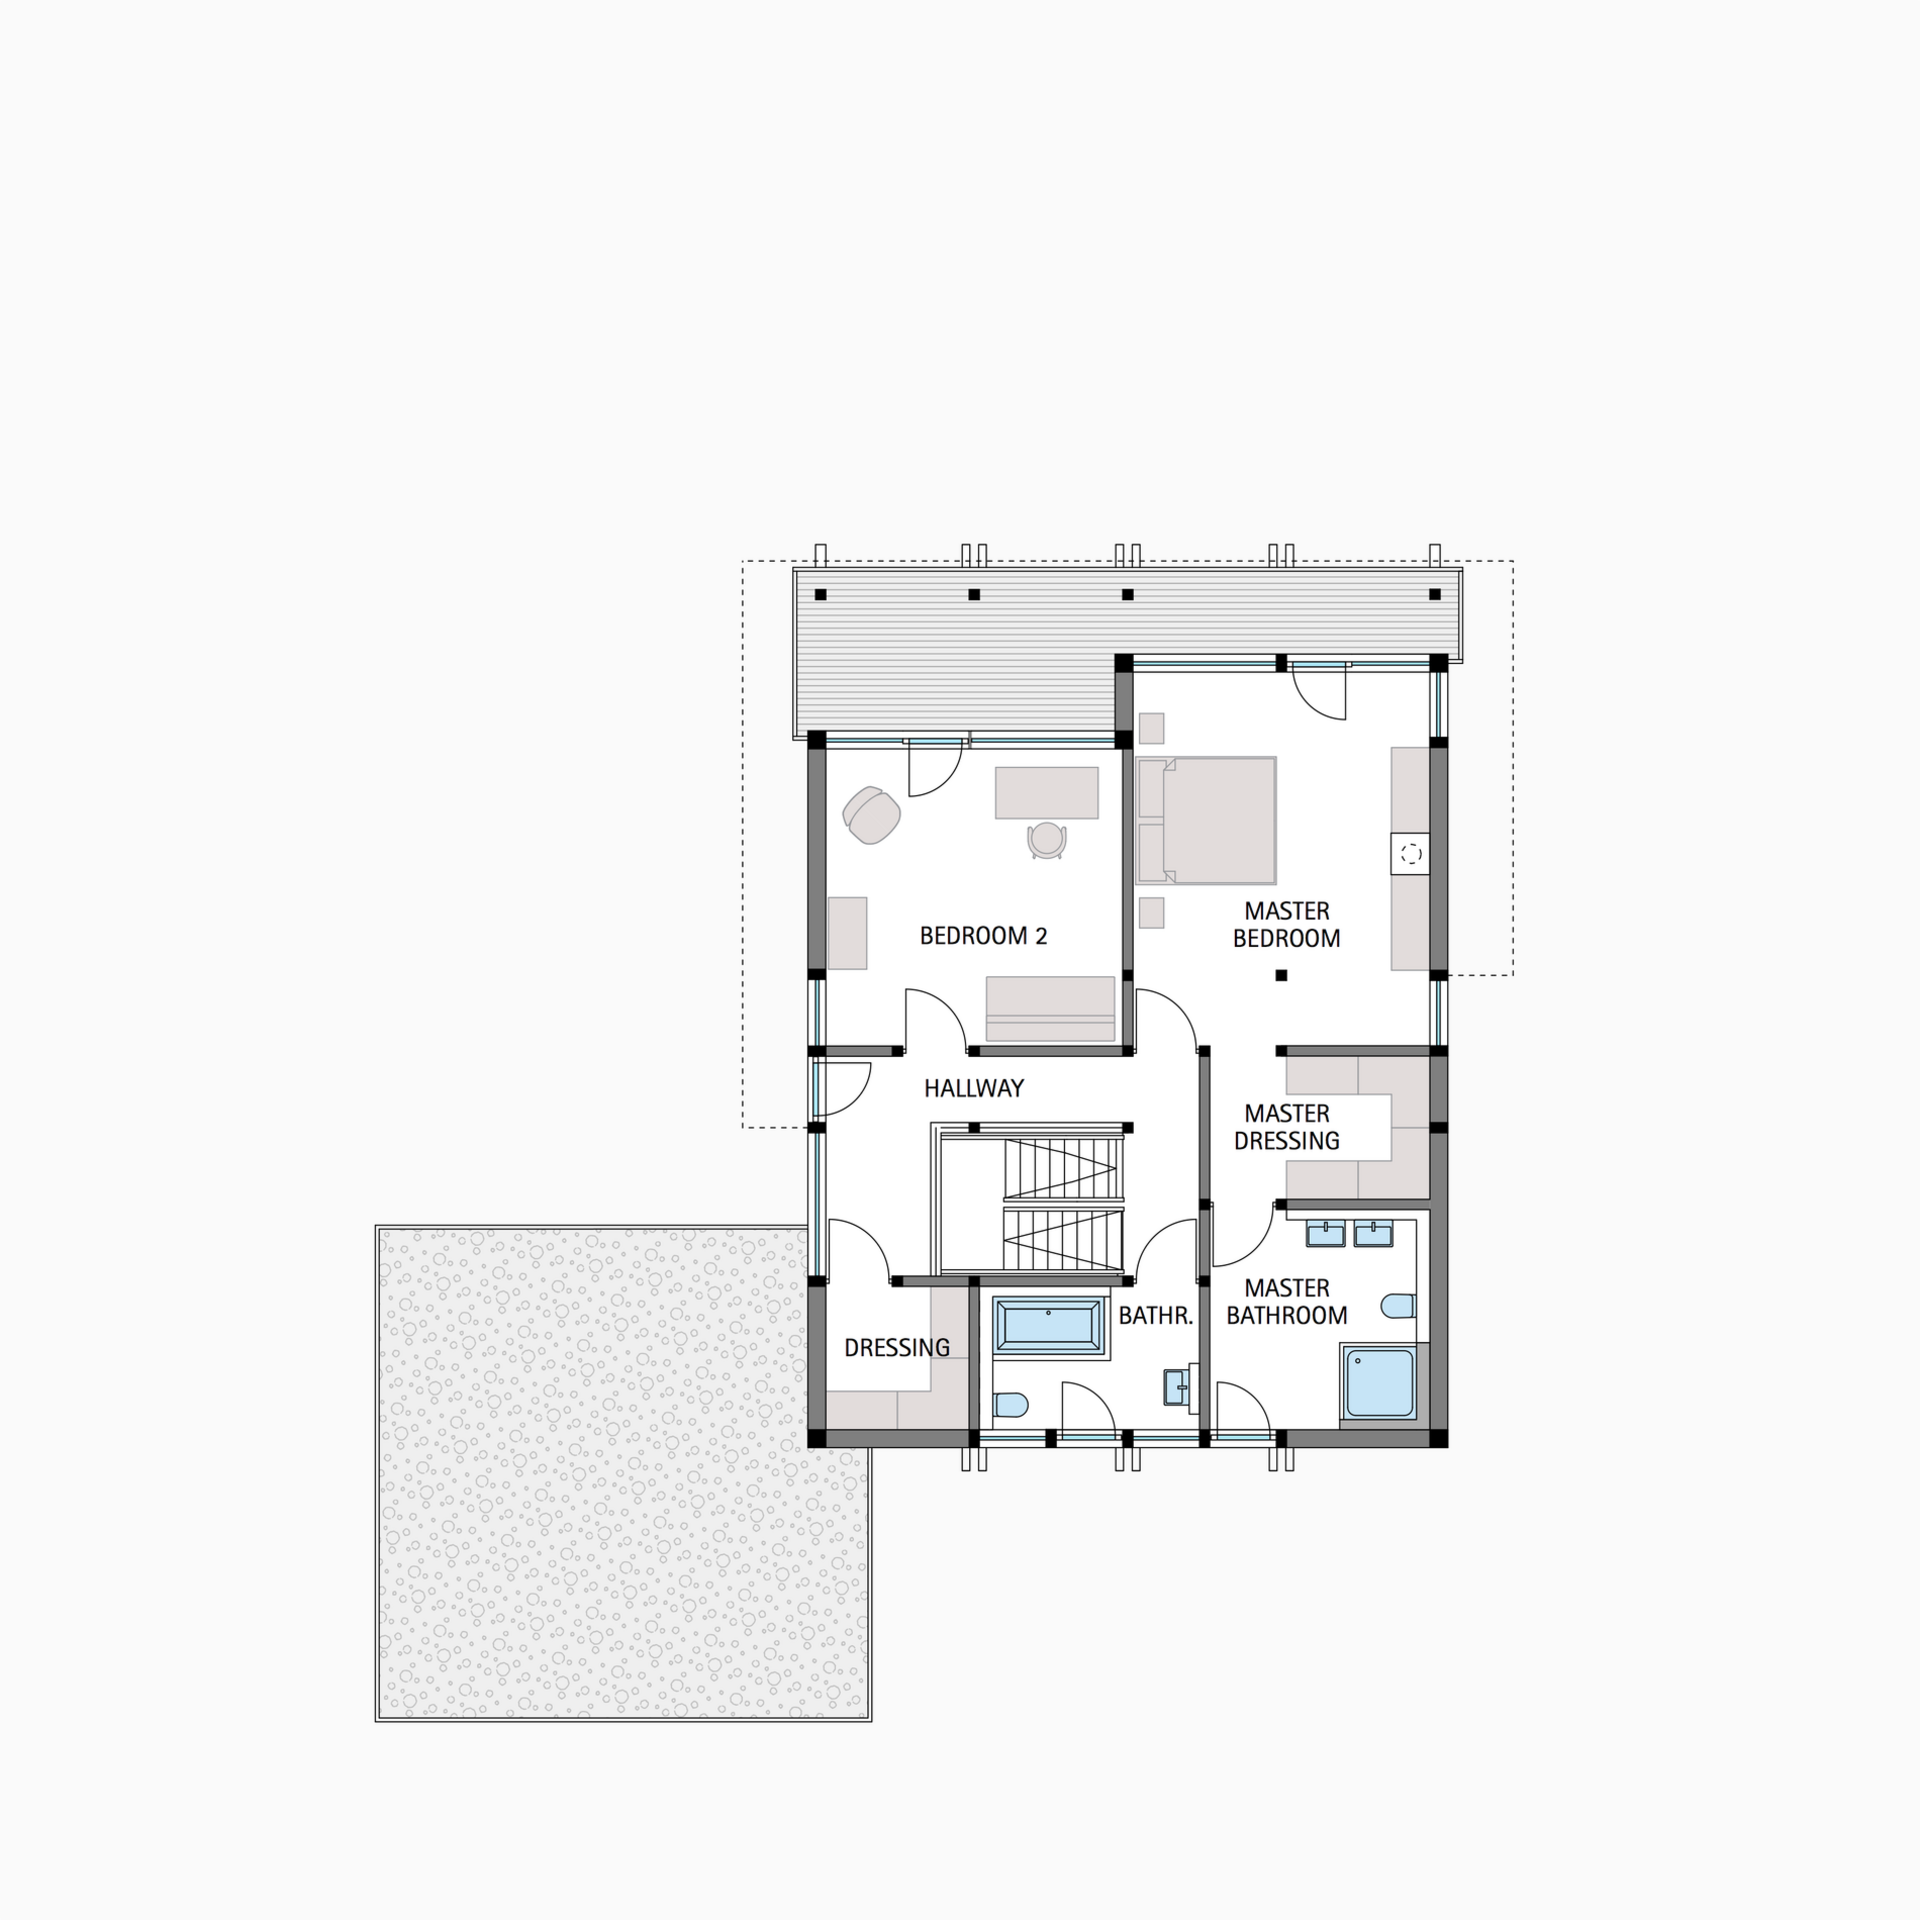 HUF house floor plan first floor flat roof